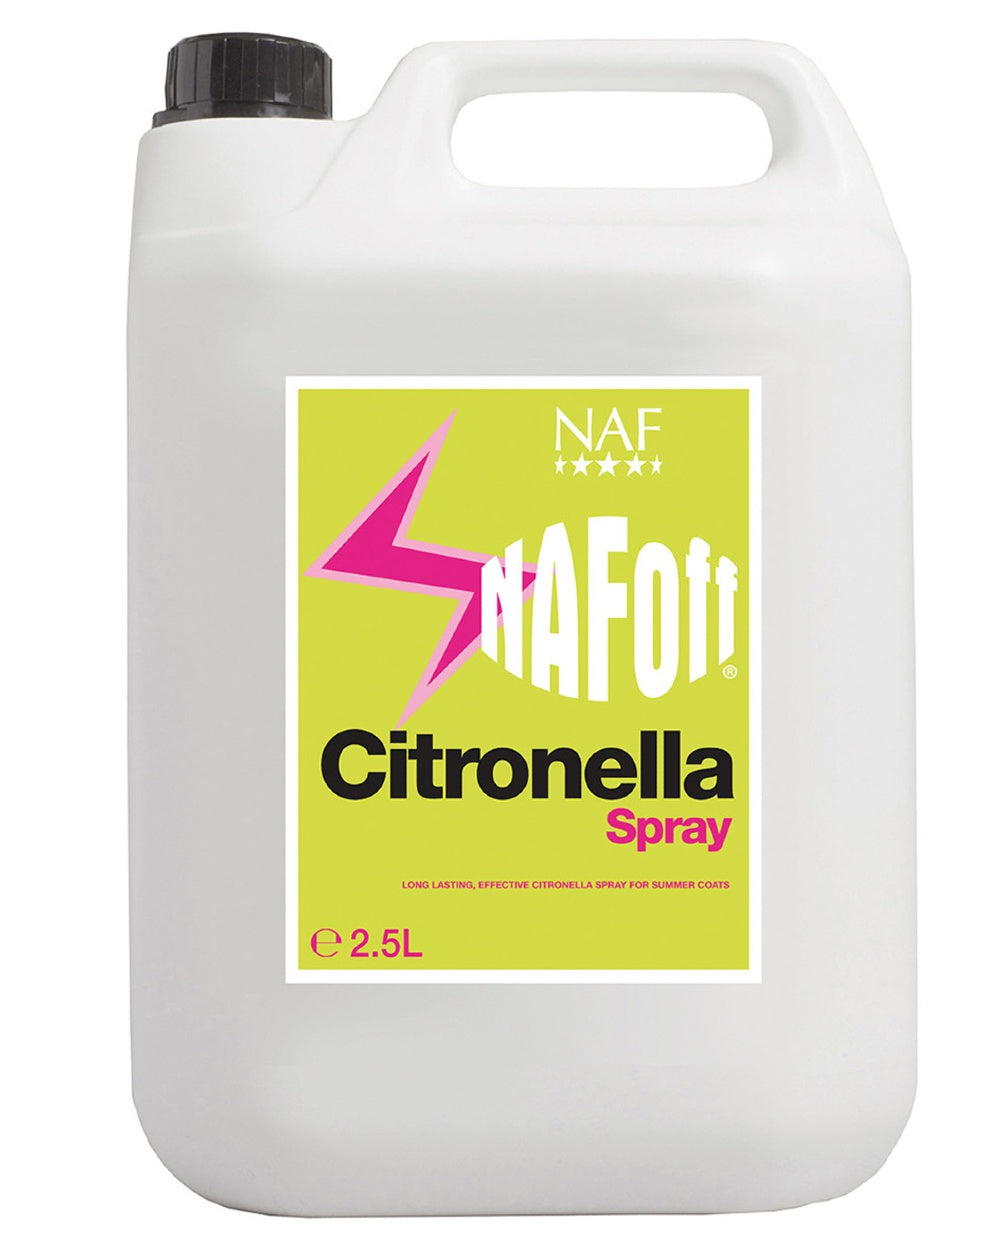 NAF Off Citronella Spray 2.5L on white background